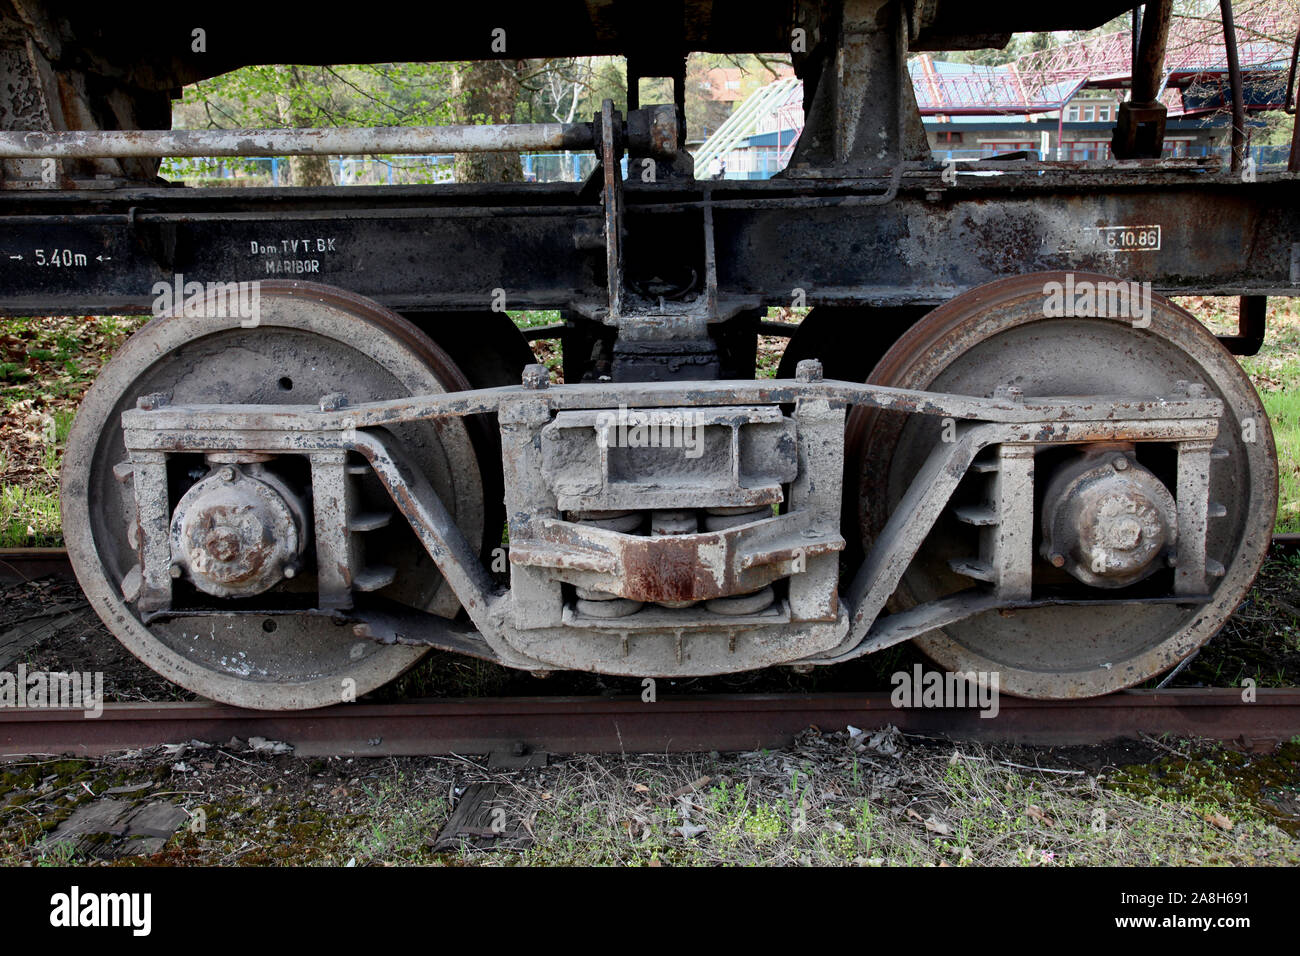 The old railway wheels Stock Photo